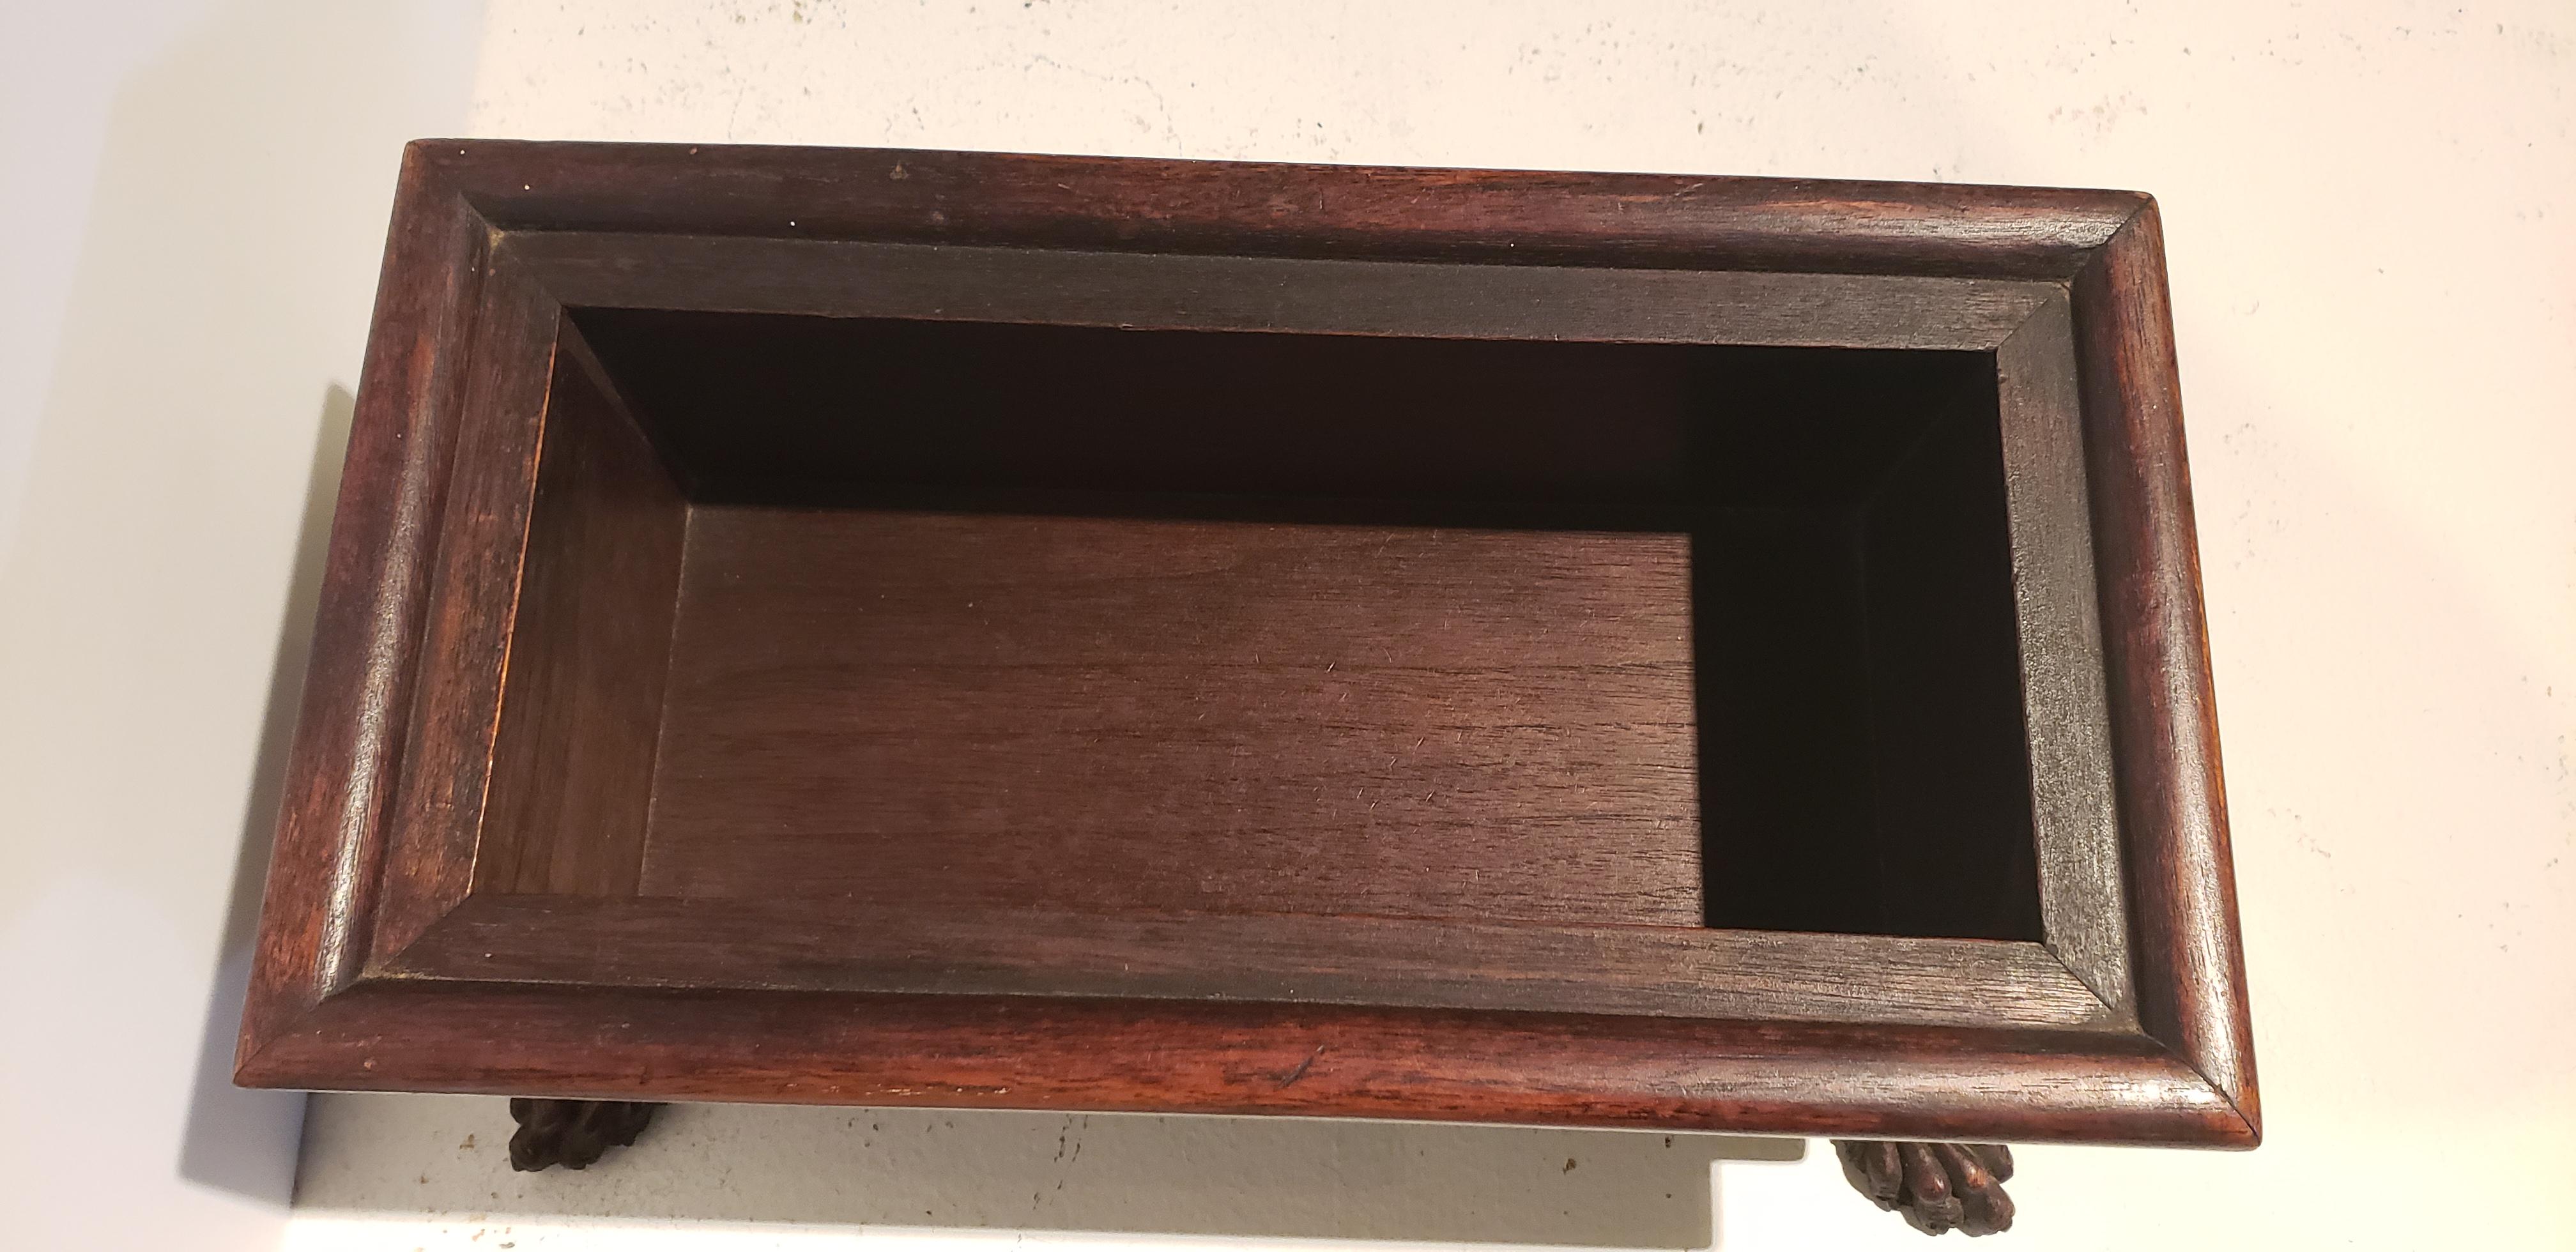 Renaissance Revival Wooden Desk Top or Jewelry Box in Walnut 2